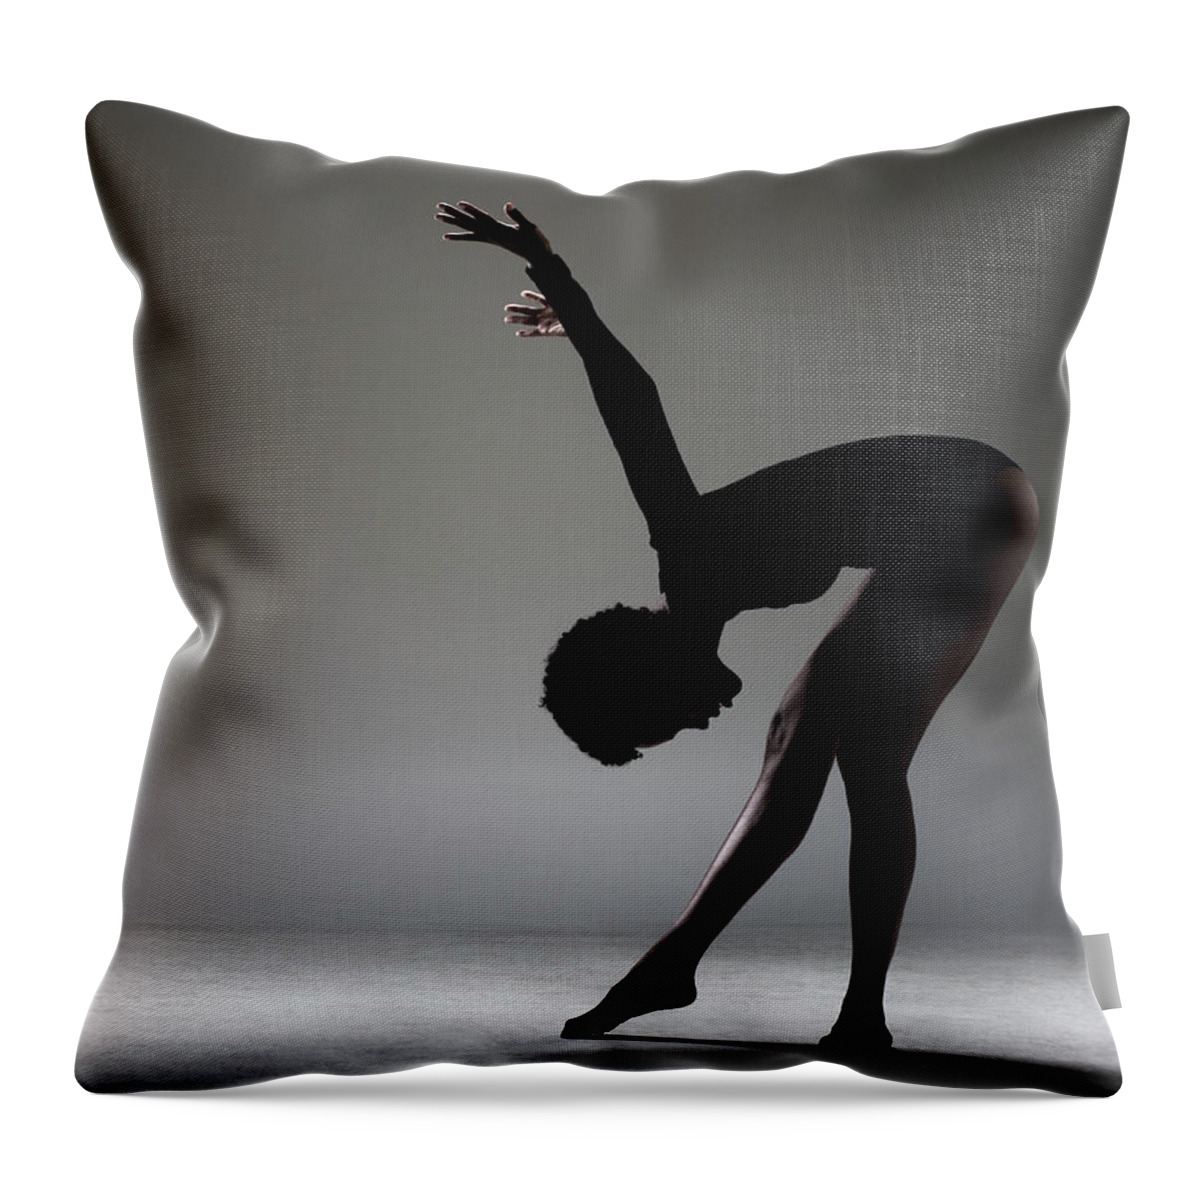 Human Arm Throw Pillow featuring the photograph Dance Studio #2 by Patrik Giardino